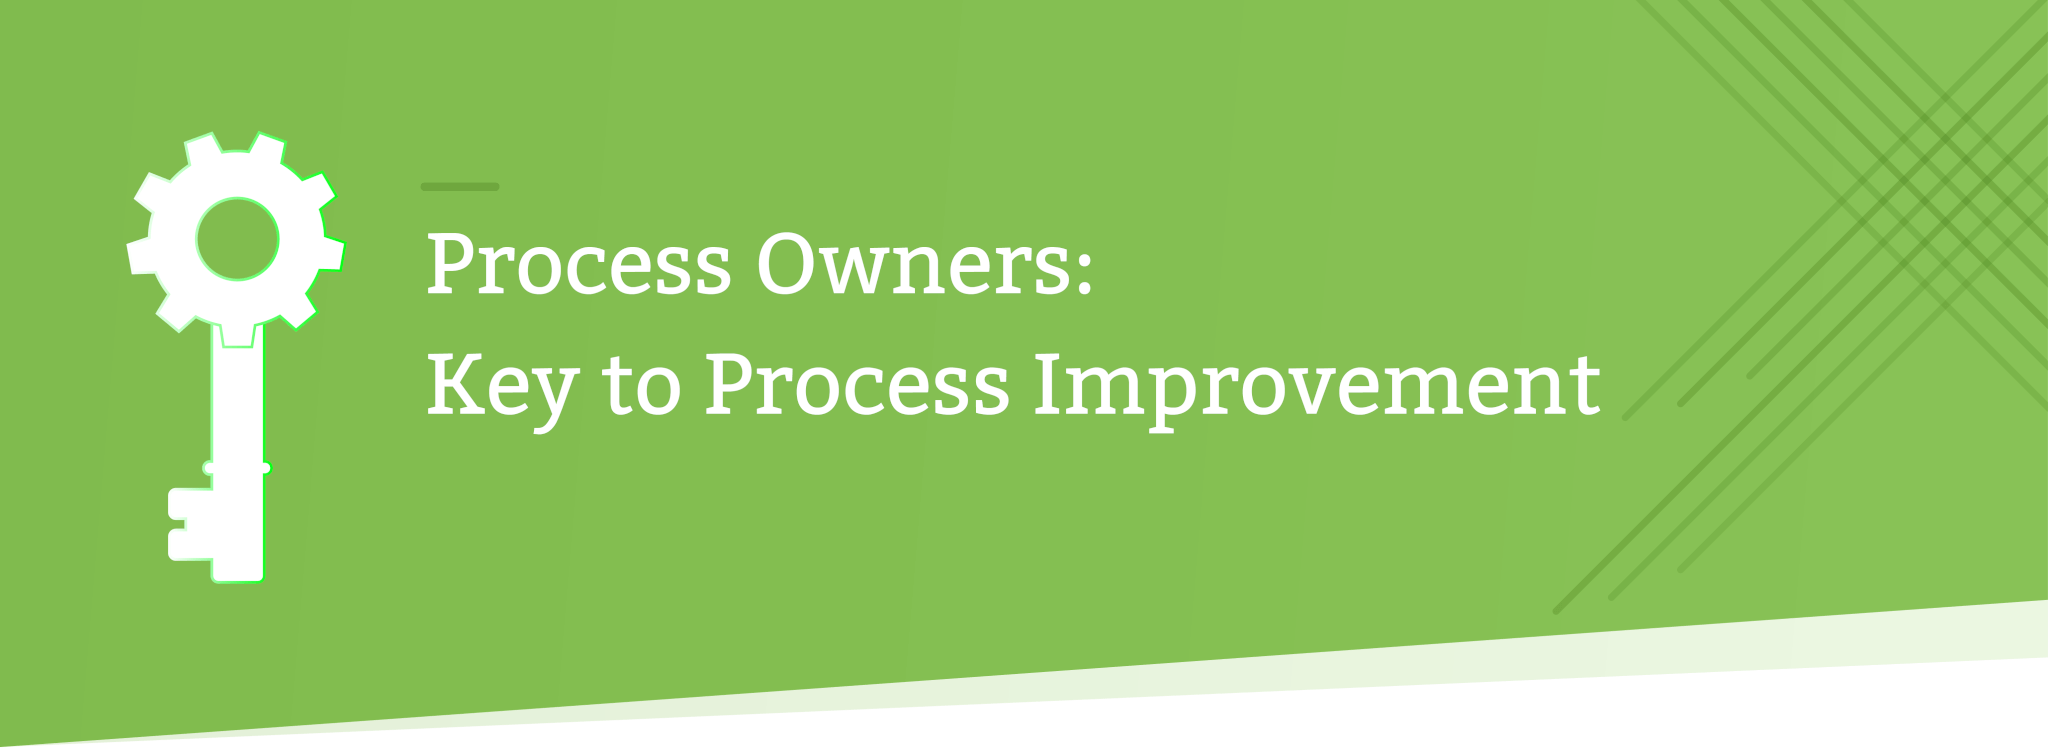 process owner key header